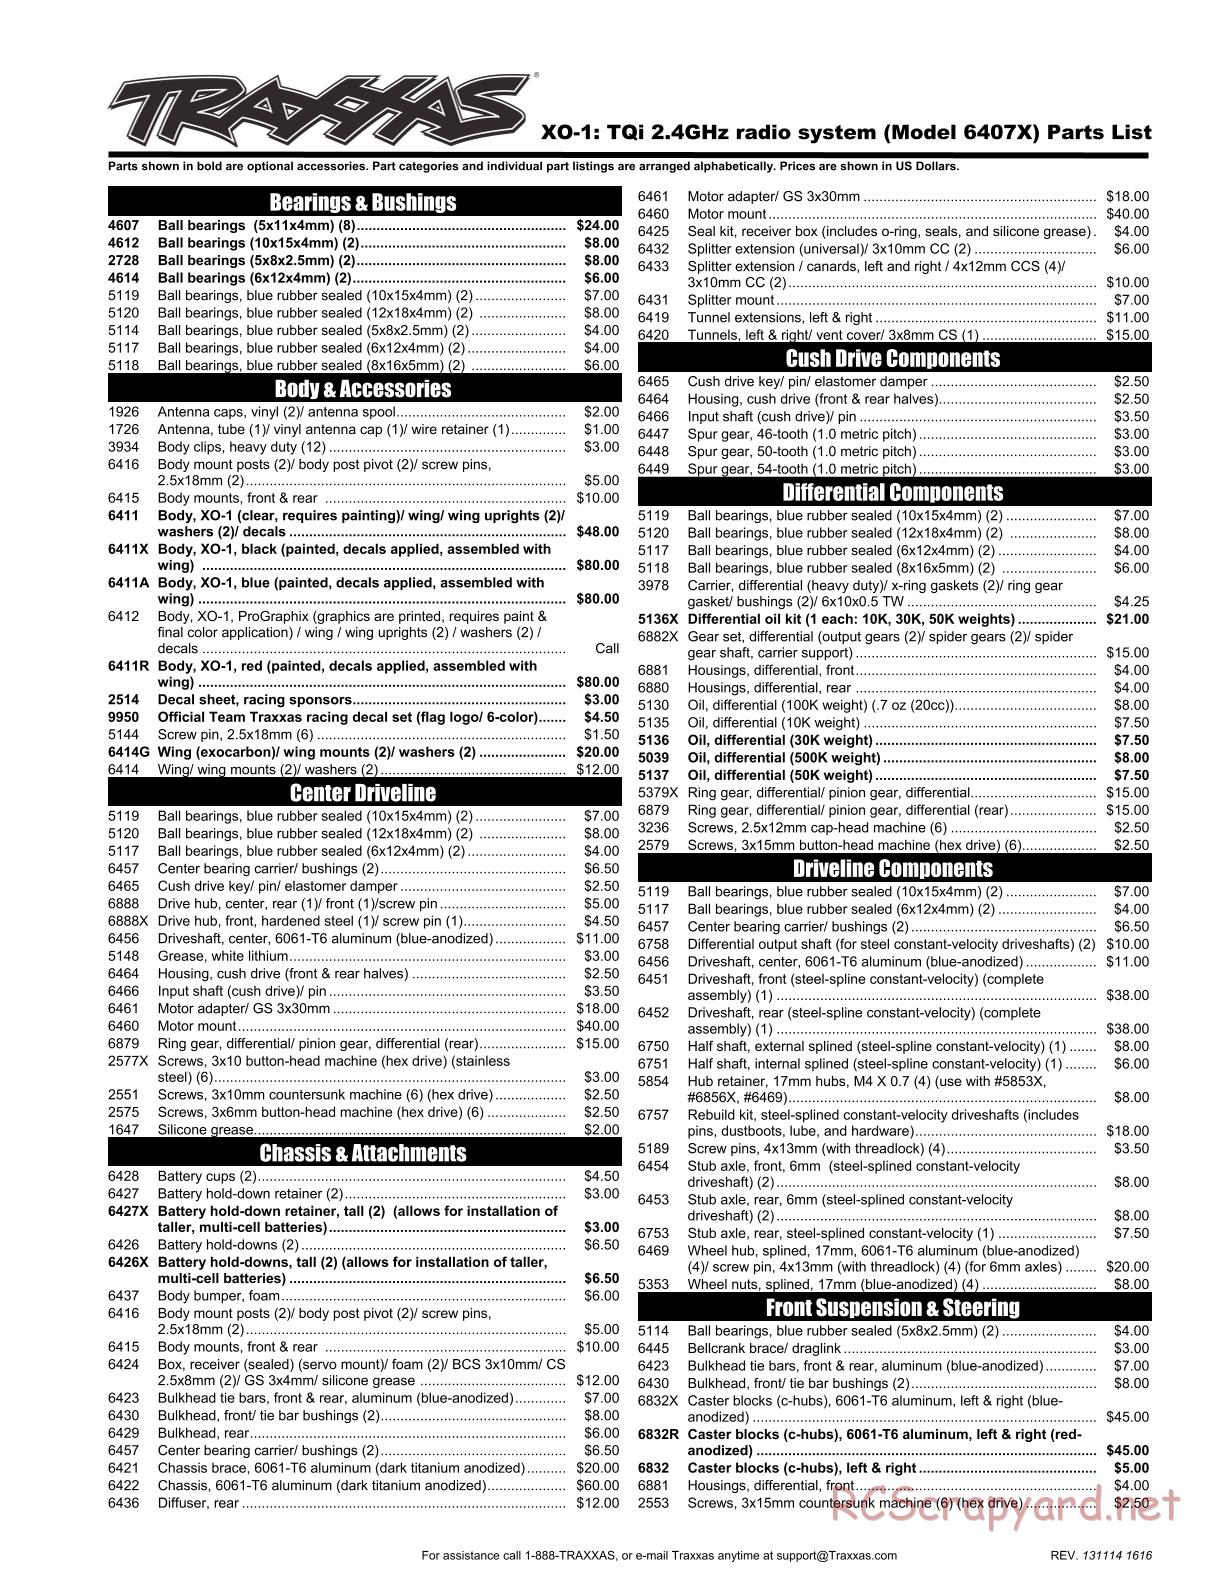 Traxxas - XO-1 (2014) - Parts List - Page 1